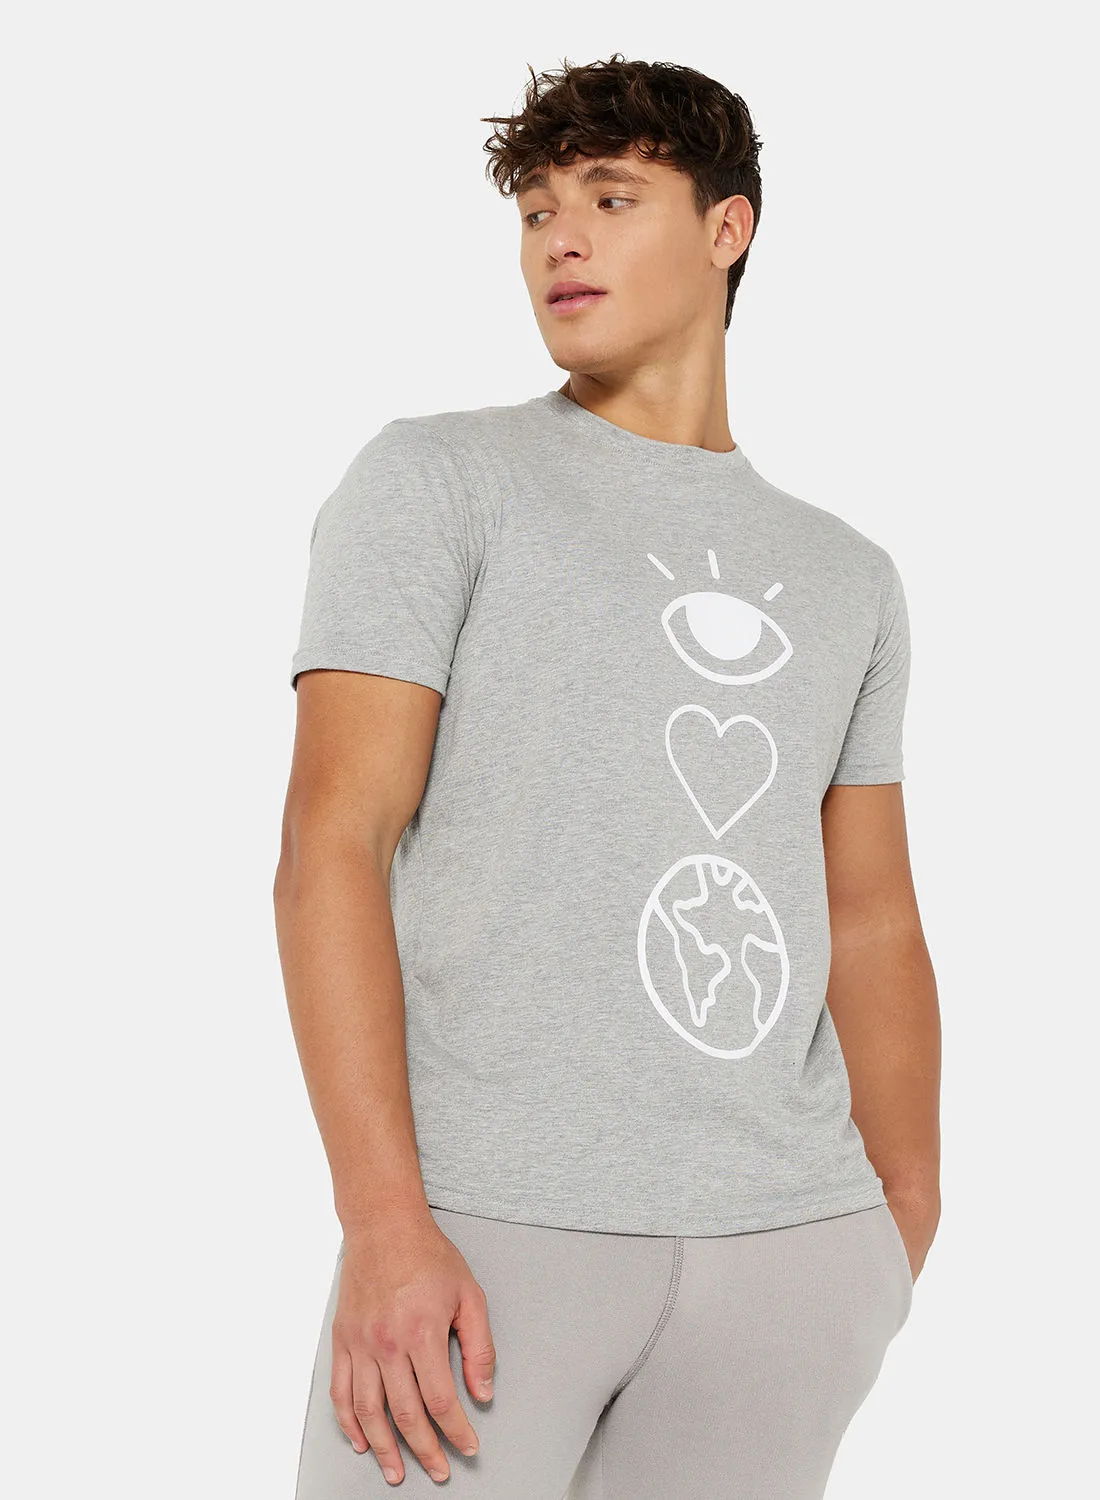 Sivvi x D'Atelier Eco-Friendly Graphic Crew T-Shirt Light Grey